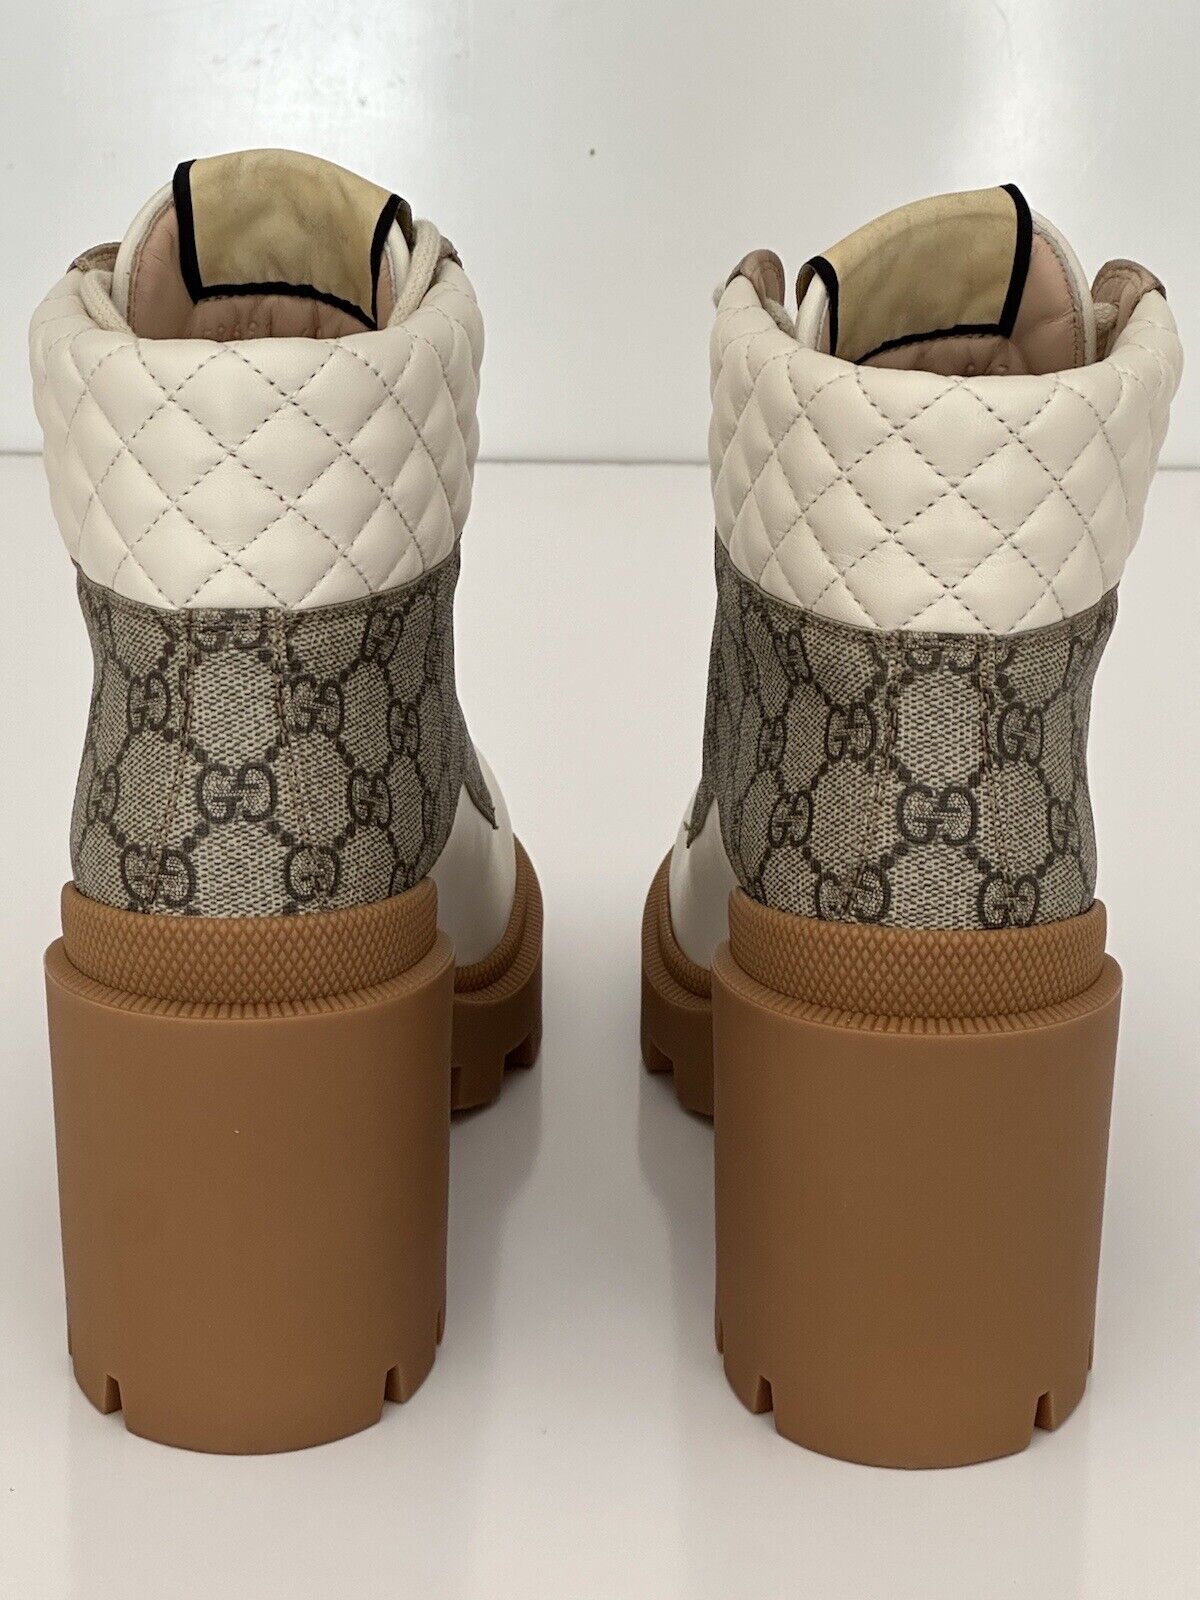 Gucci  Women's GG Supreme Leather Beige Boots 9 US (39 Euro) 659691 IT NIB